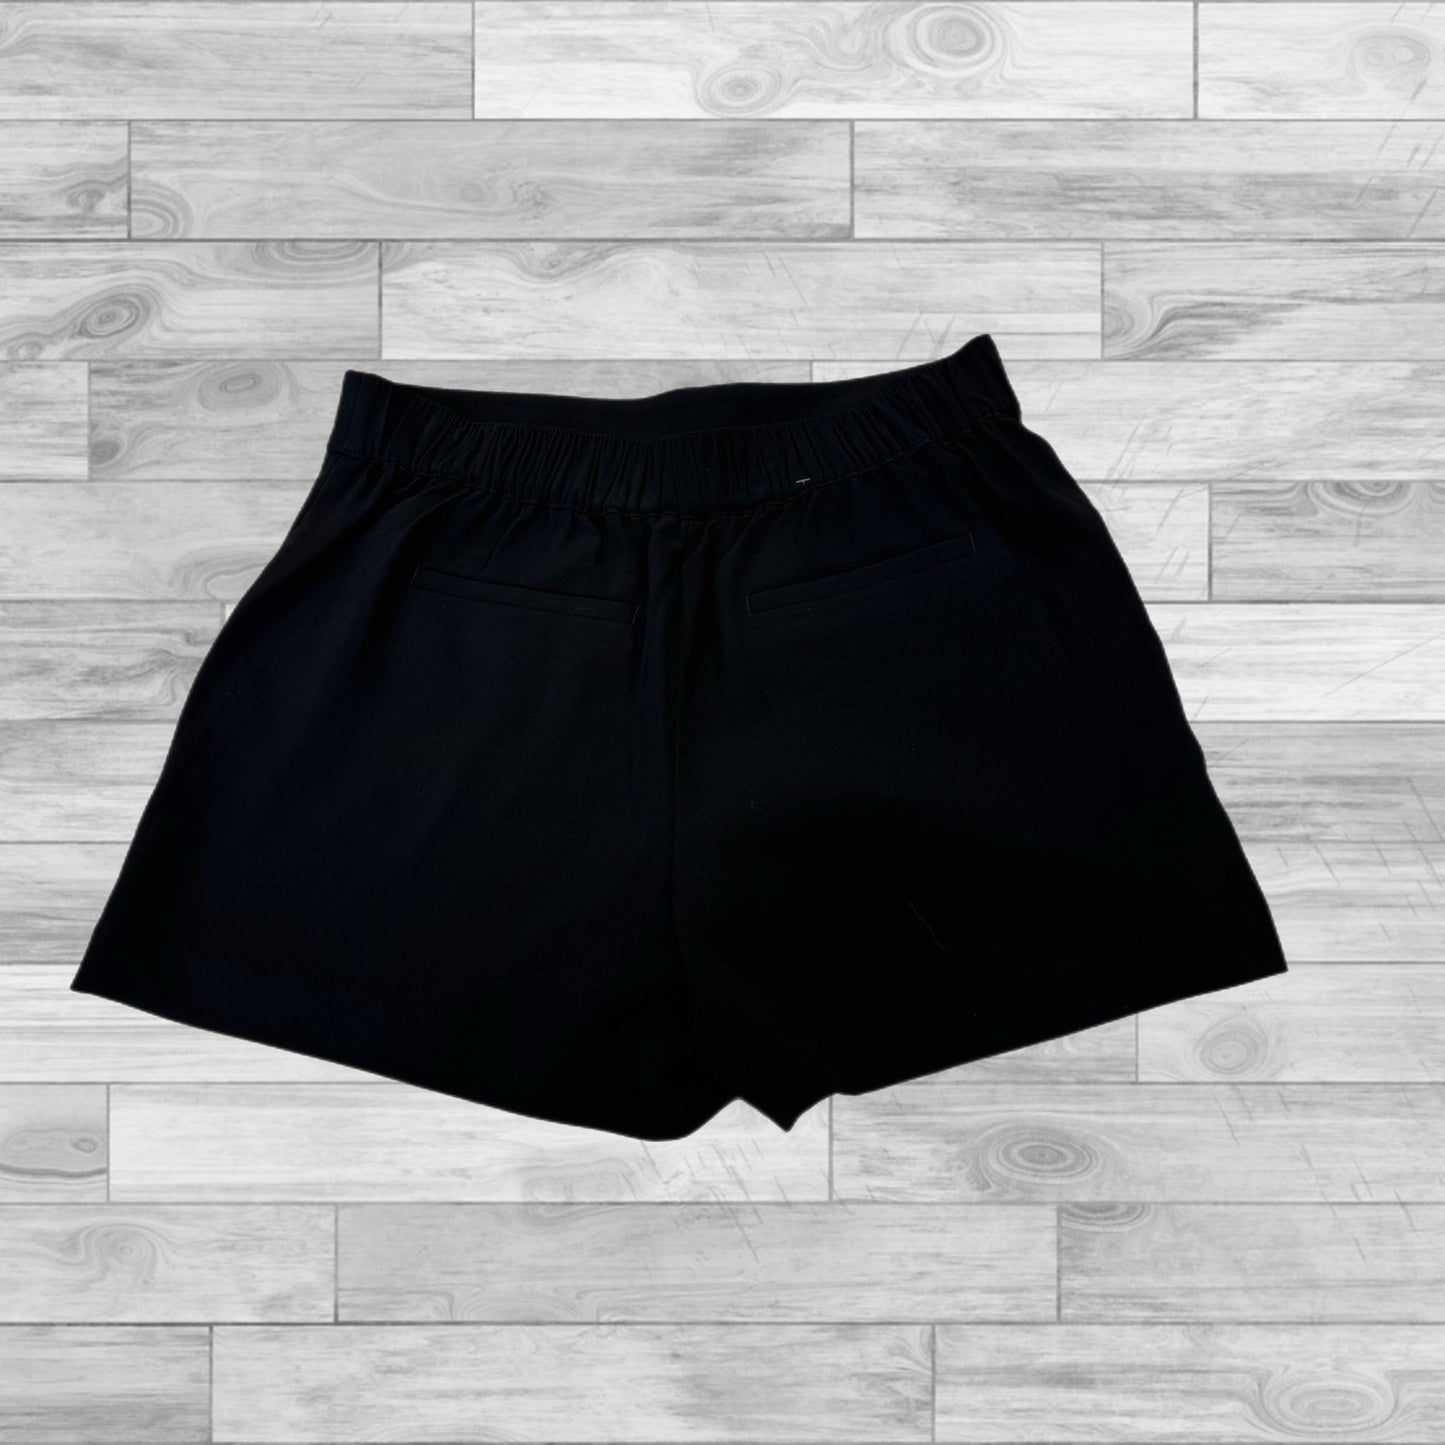 Black Shorts Loft, Size S